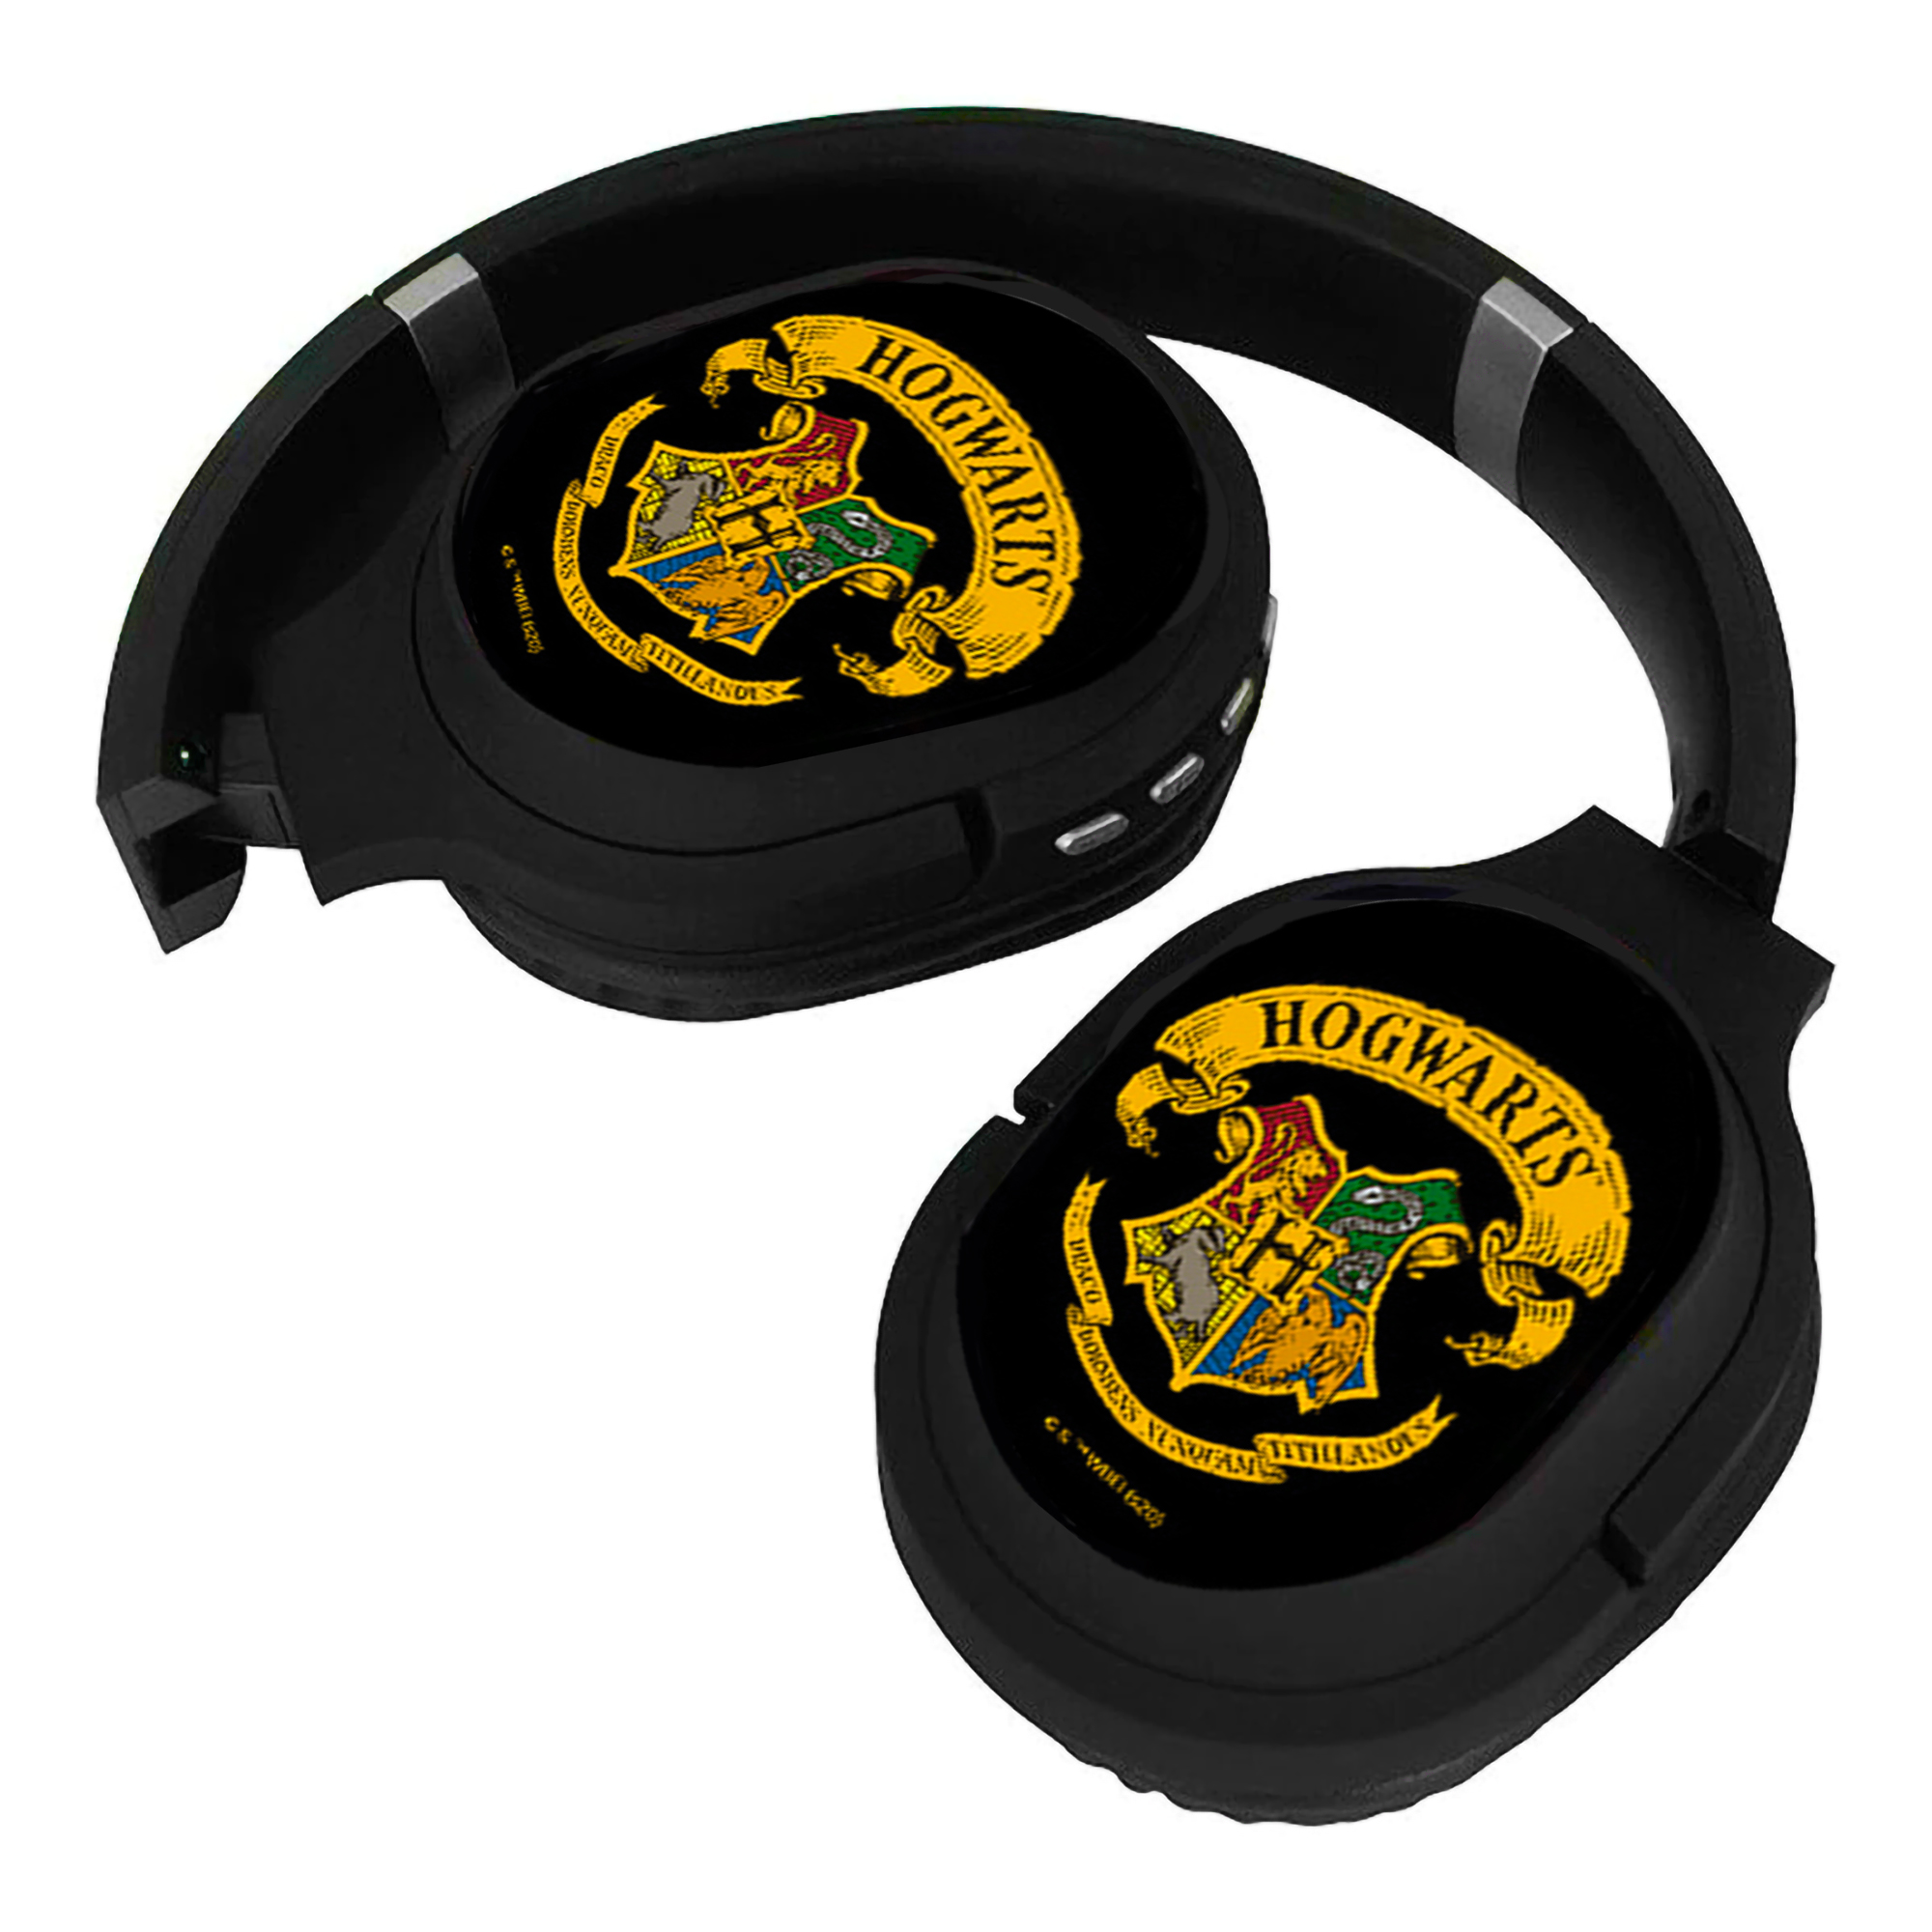 Auscultadores Bluetooth Harry Potter Hogwarts - Headphones sem fio | Sport Zone MKP